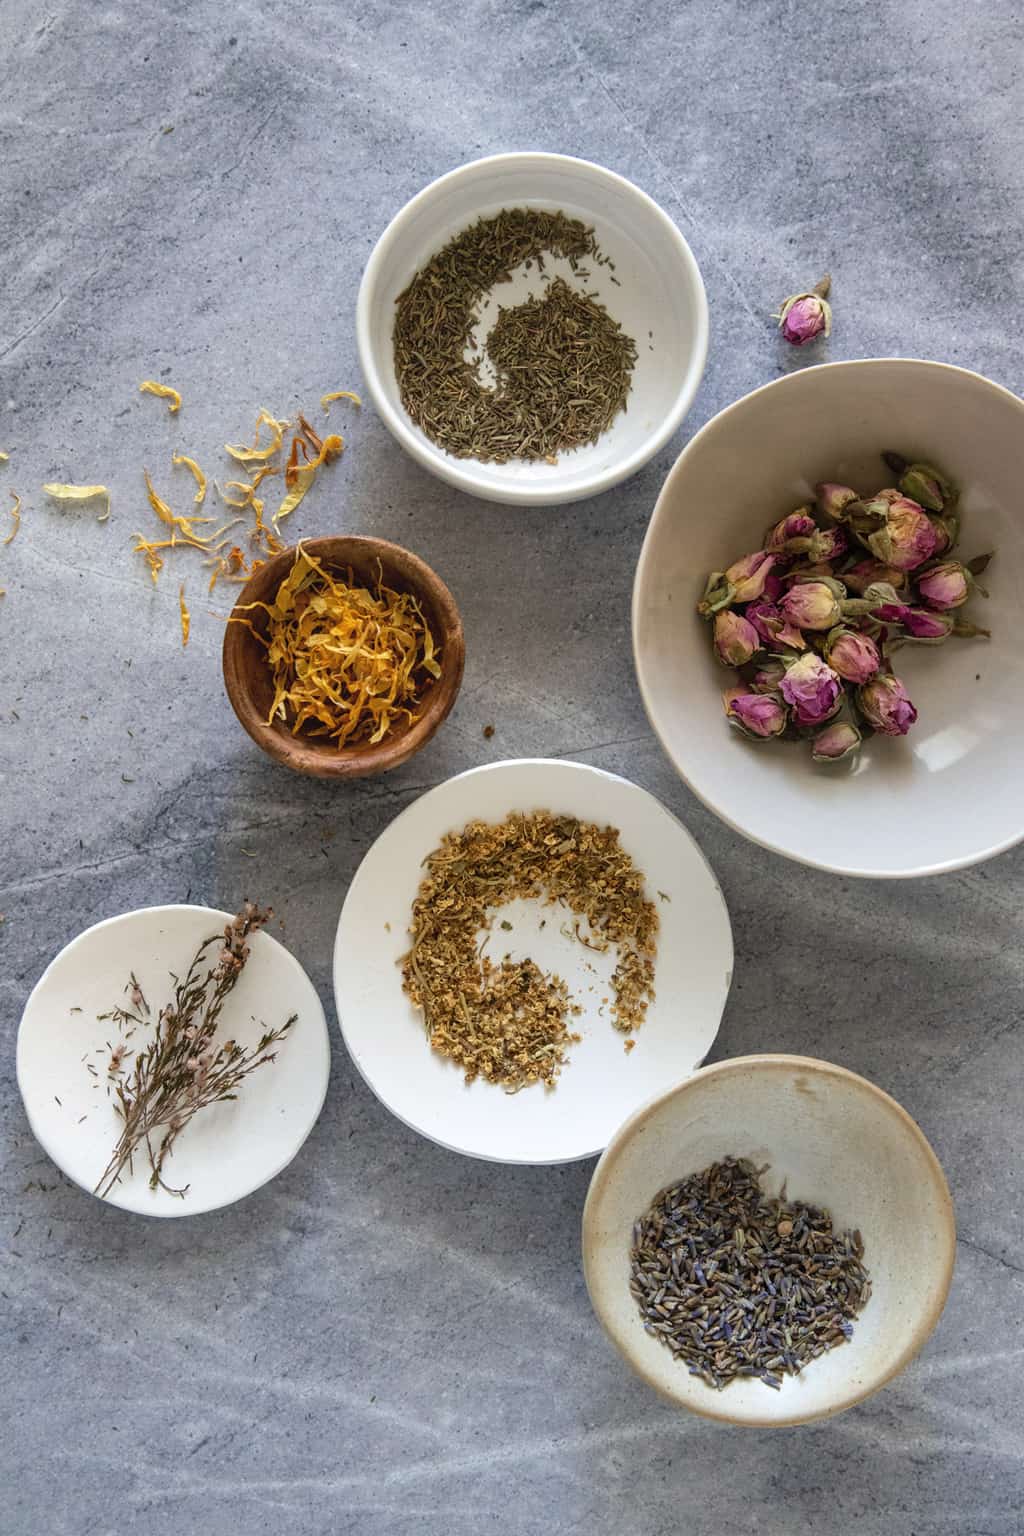 Best herbs for making herbal salves